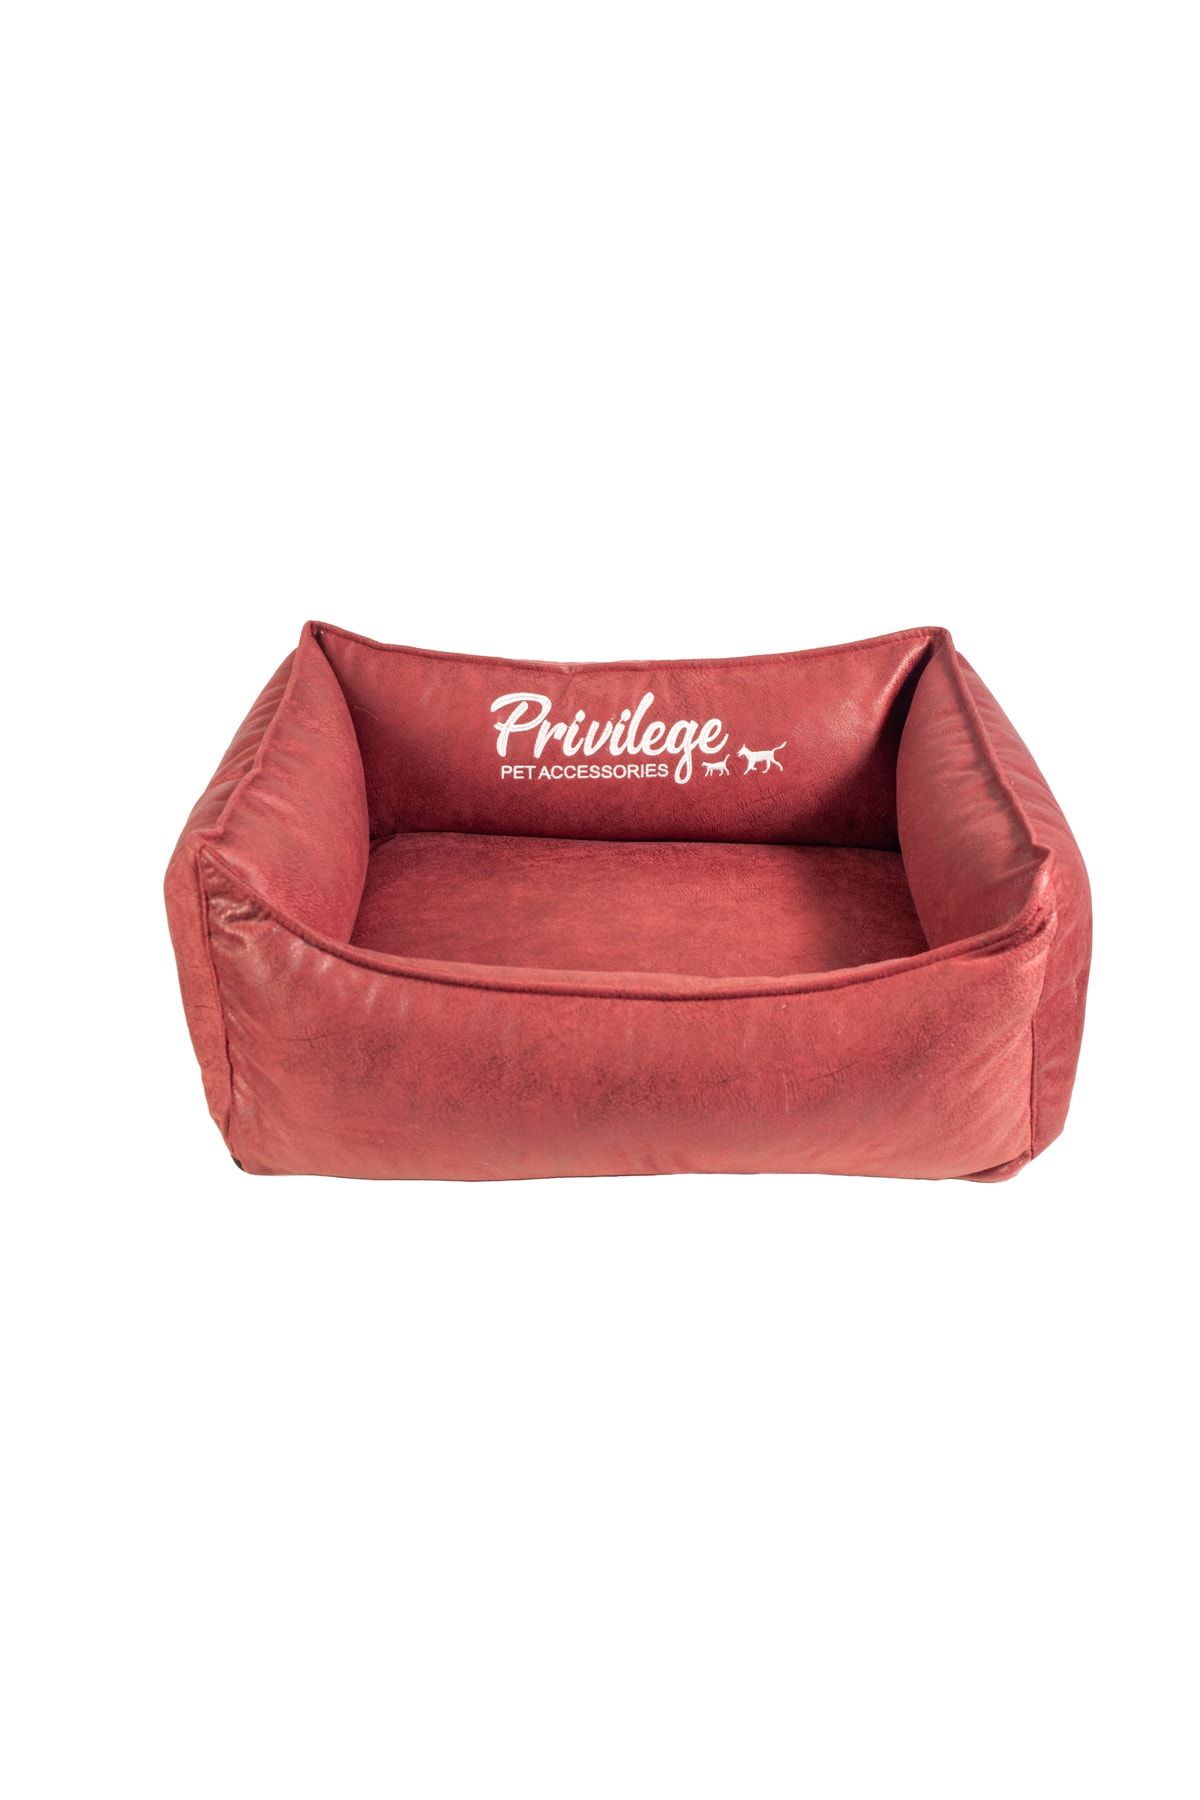 Privilege Premium Visco Kedi Yatağı Kırmızı Medium 50x70x22 Cm